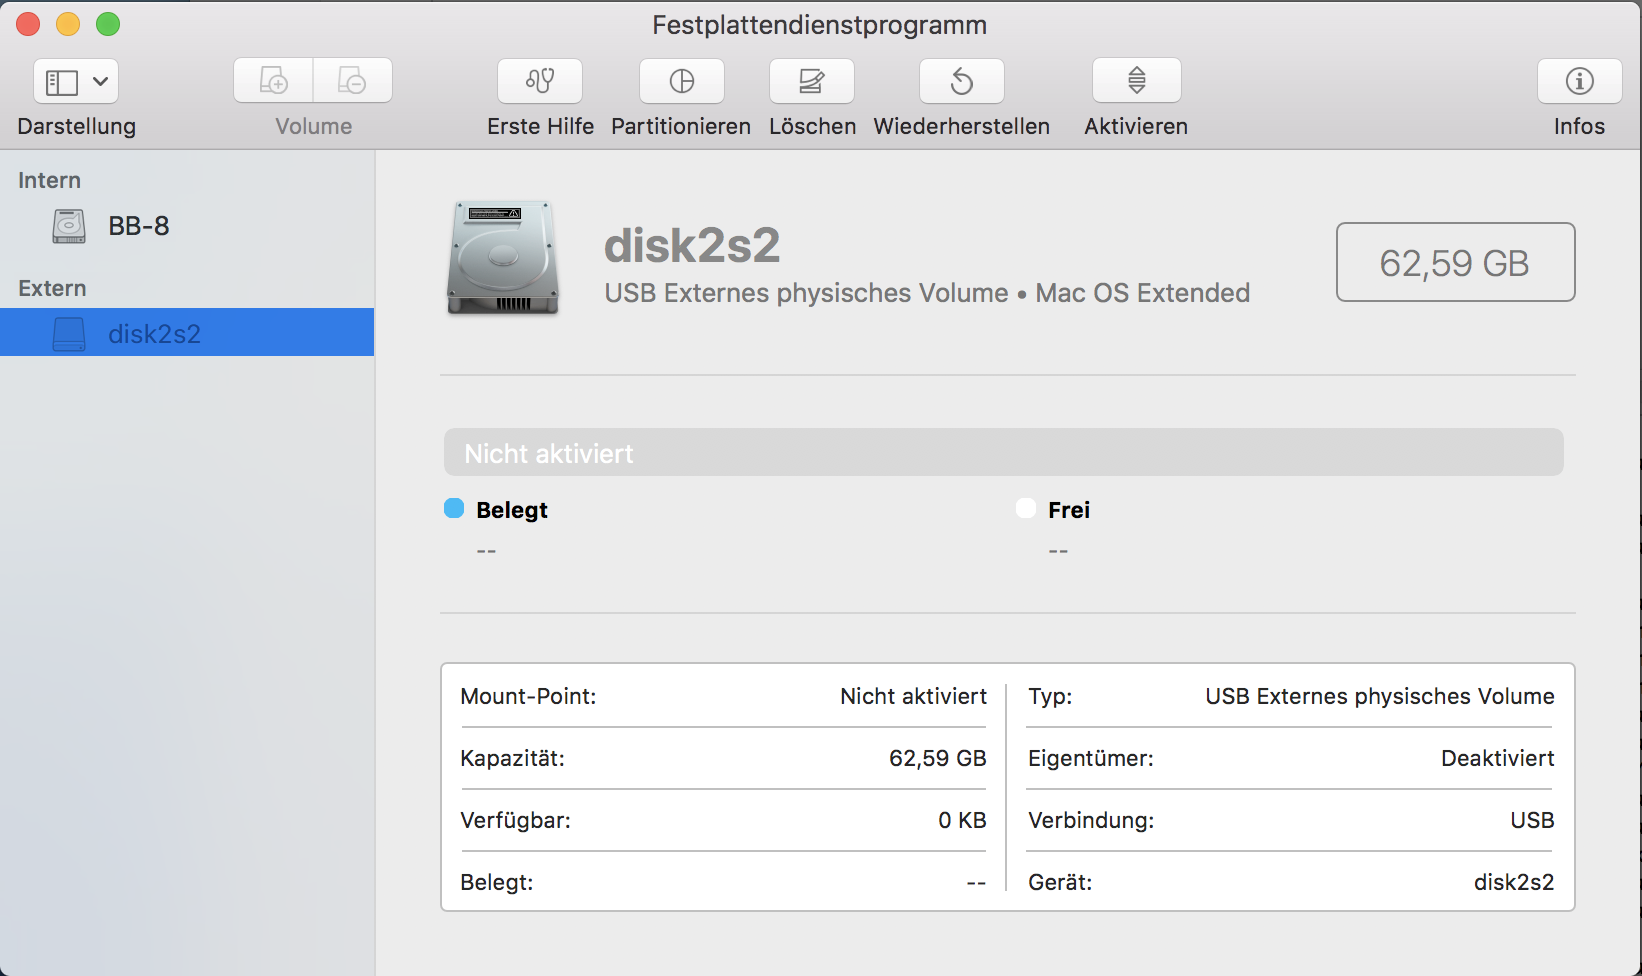 mac disk utility for windows